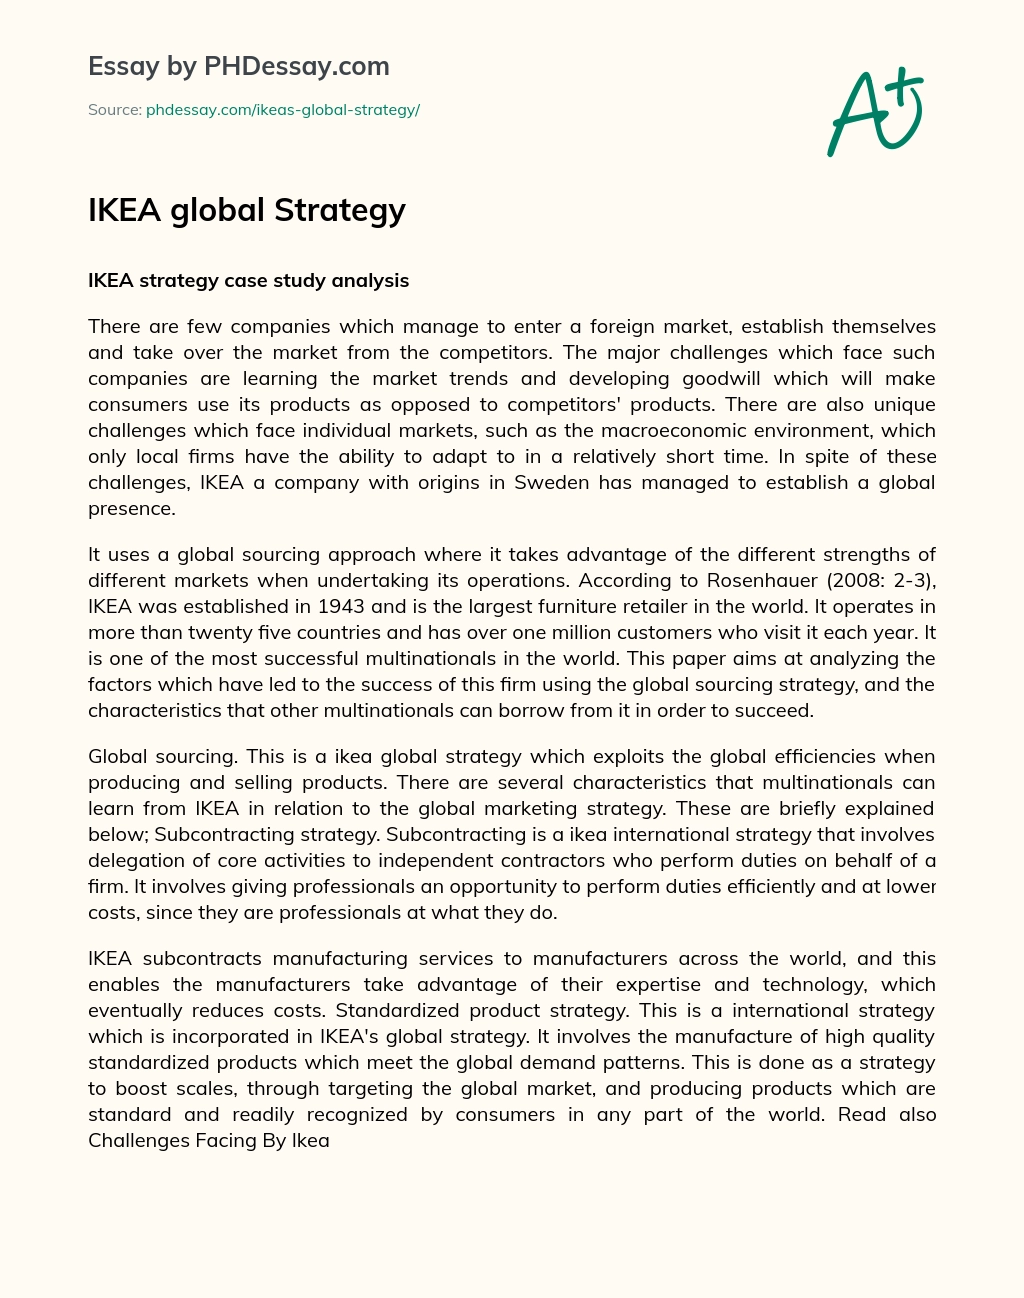 IKEA global Strategy essay